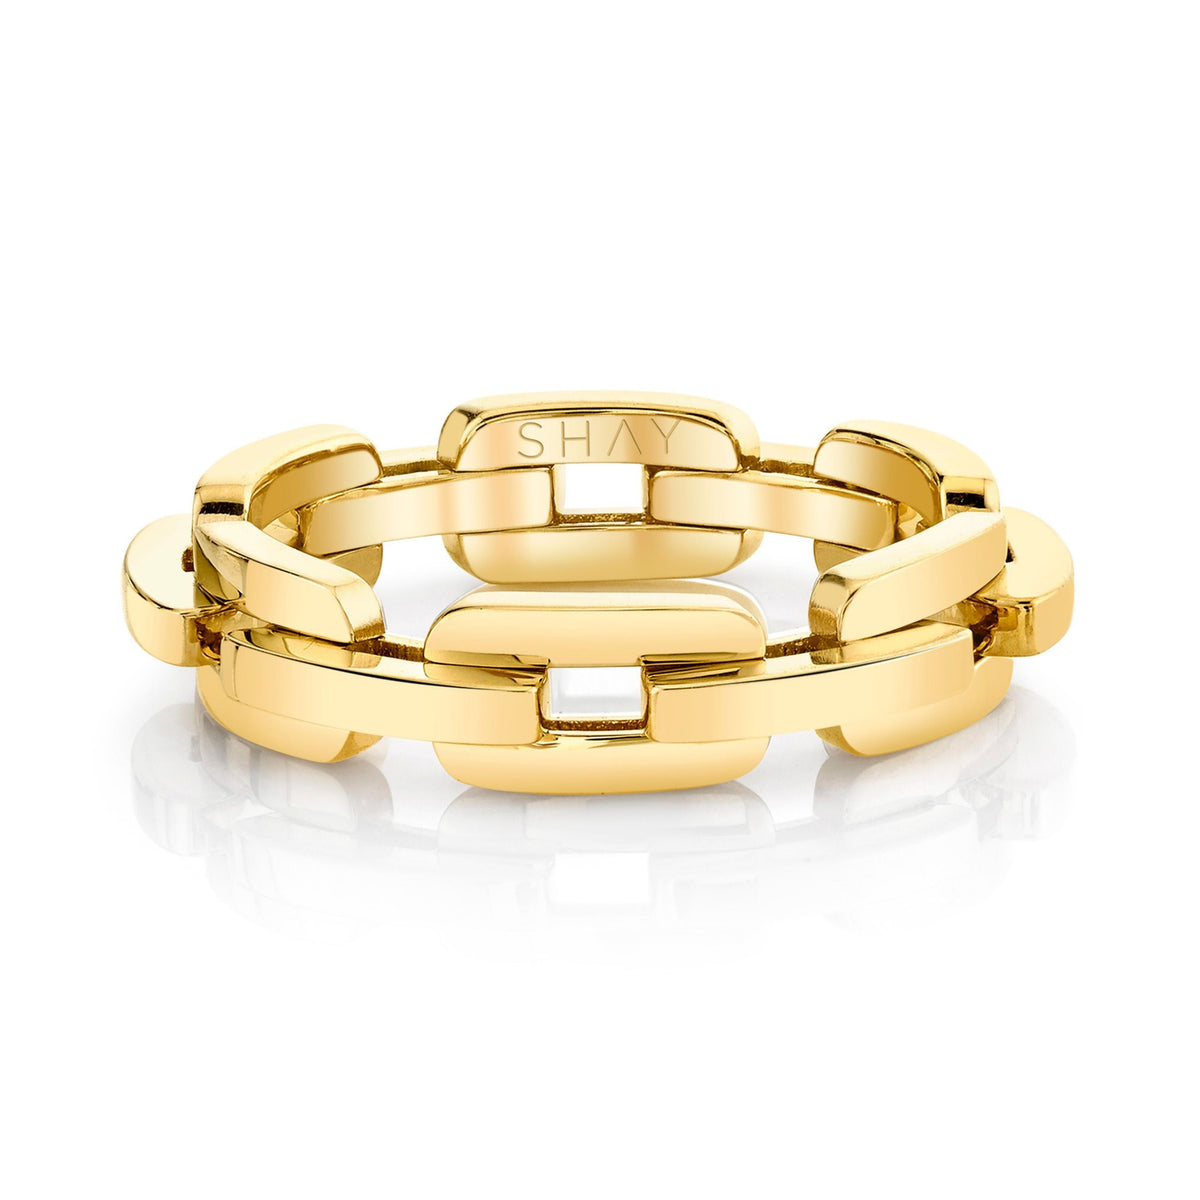 Rockman Jewelry Bolt Gold Key Ring (Small)